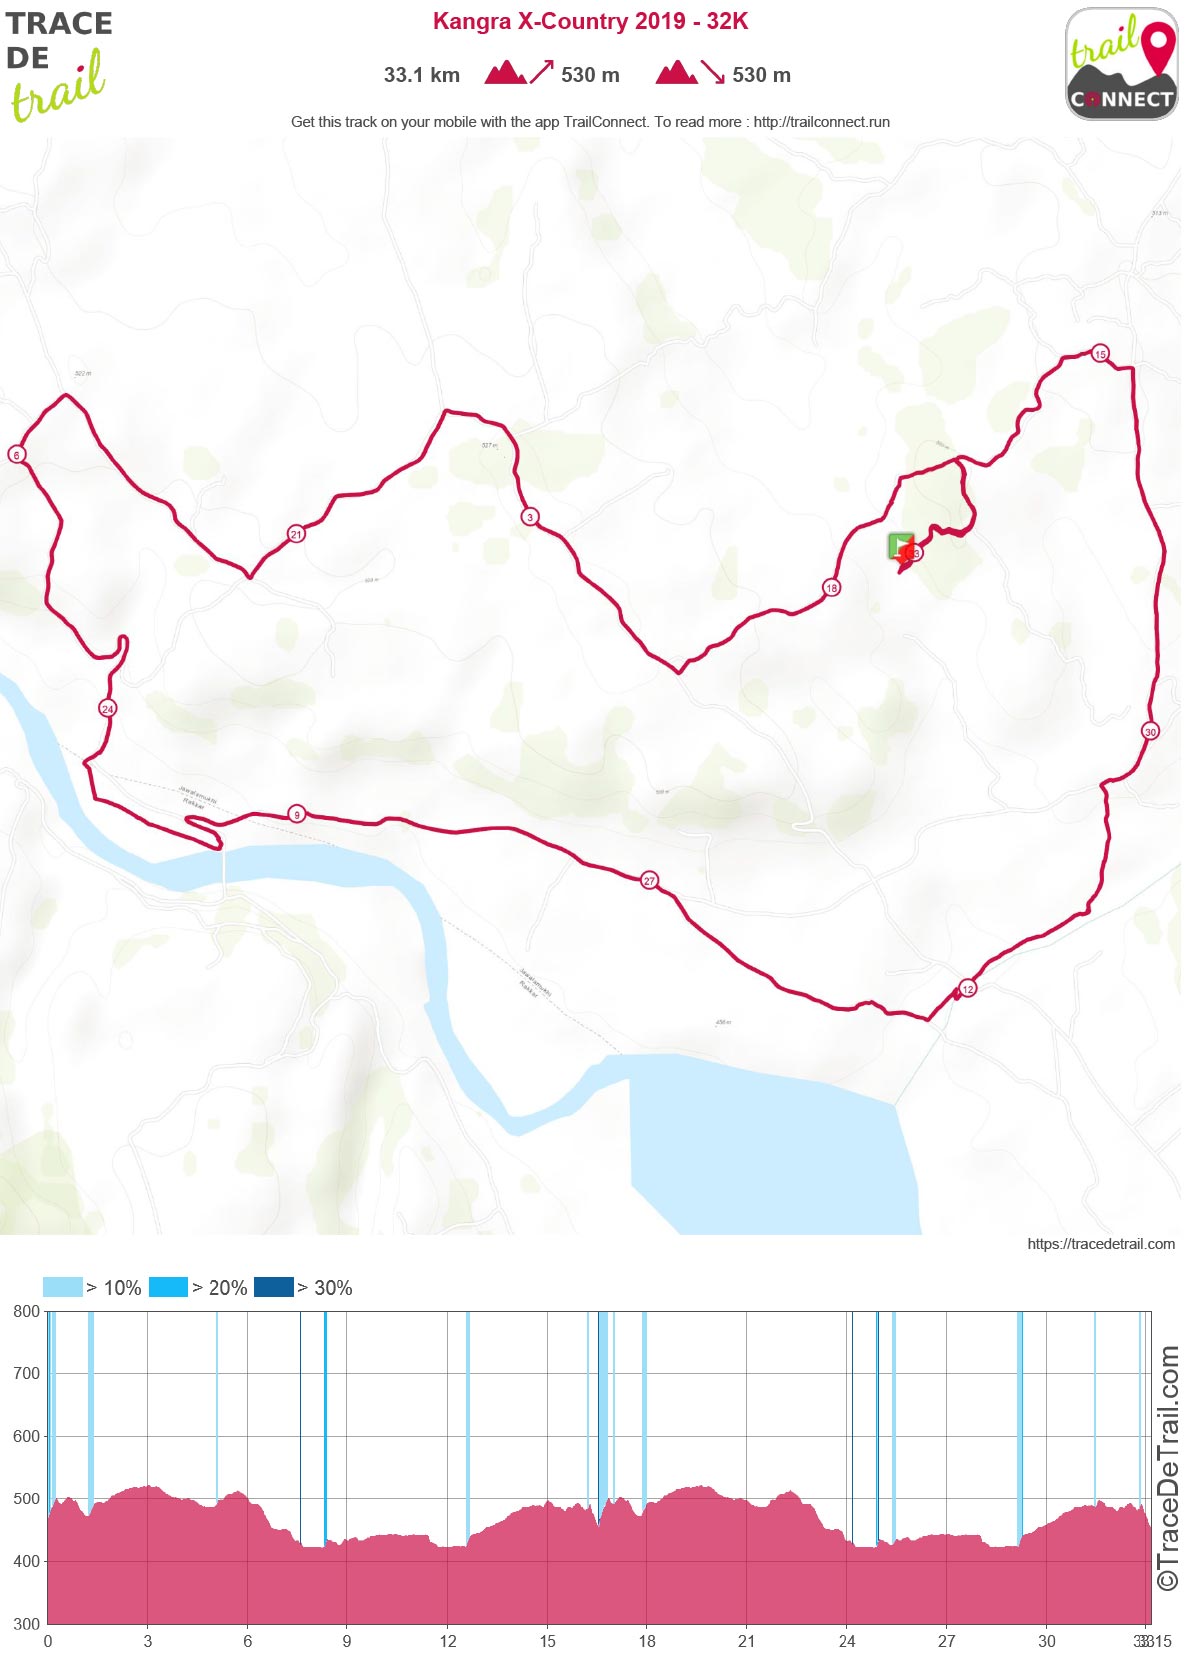 Route Map and Route Profile, 3rd Kangra X-Country Run, 28 April 2019, 48Km, 32Km, 16Km run, Dohg village, Lower Ghallaur, Tehsil Jwalamukhi, District Kangra, Himachal Pradesh